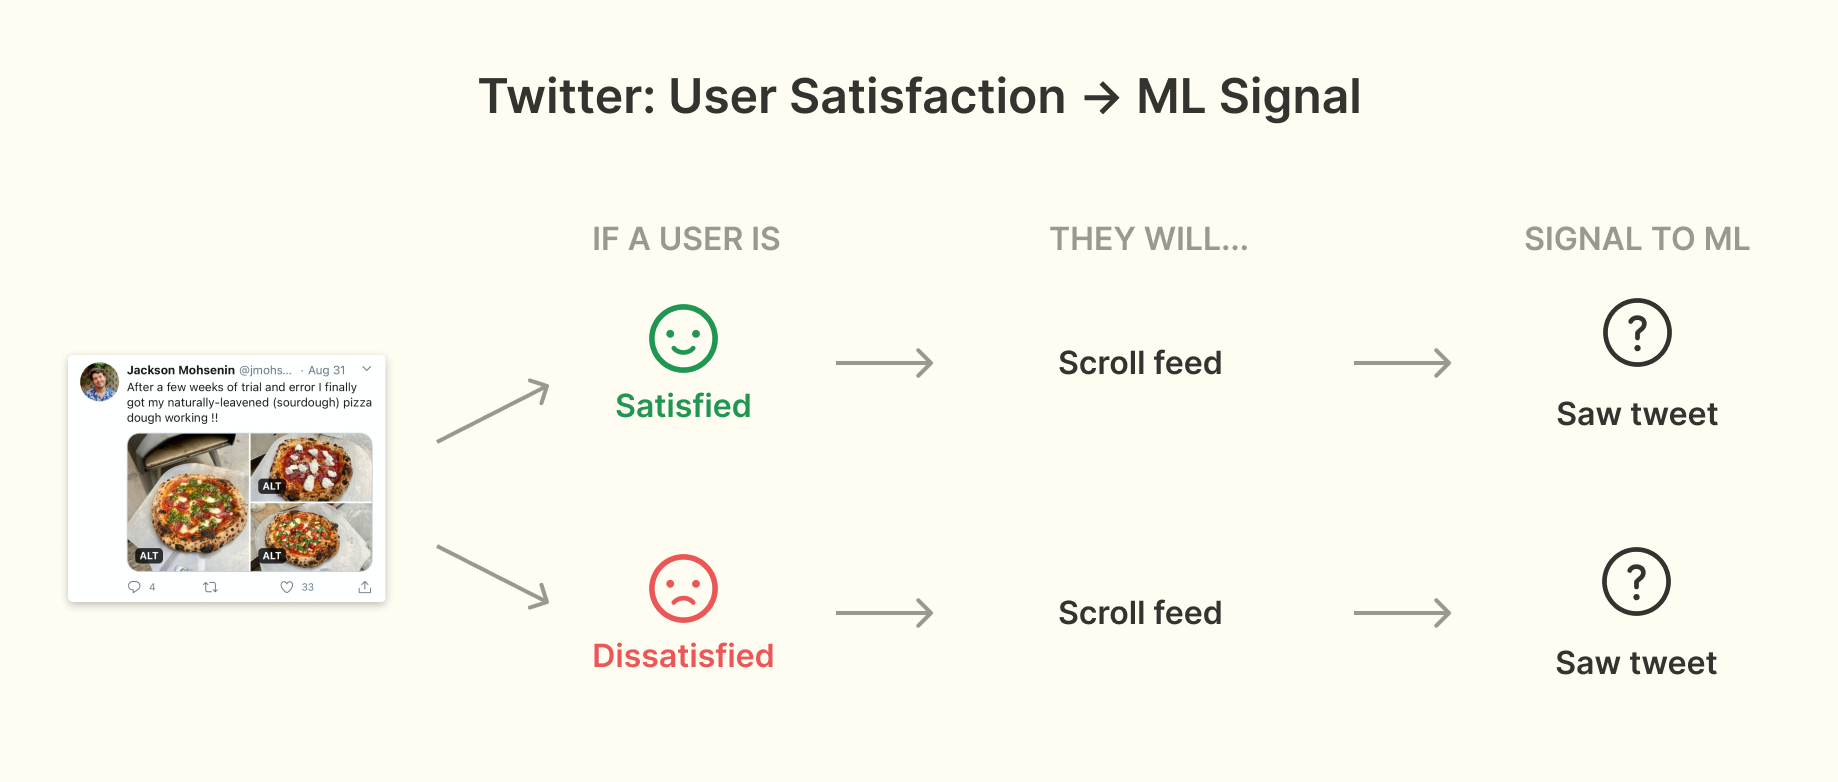 Twitter: User Satisfaction -> ML Signal